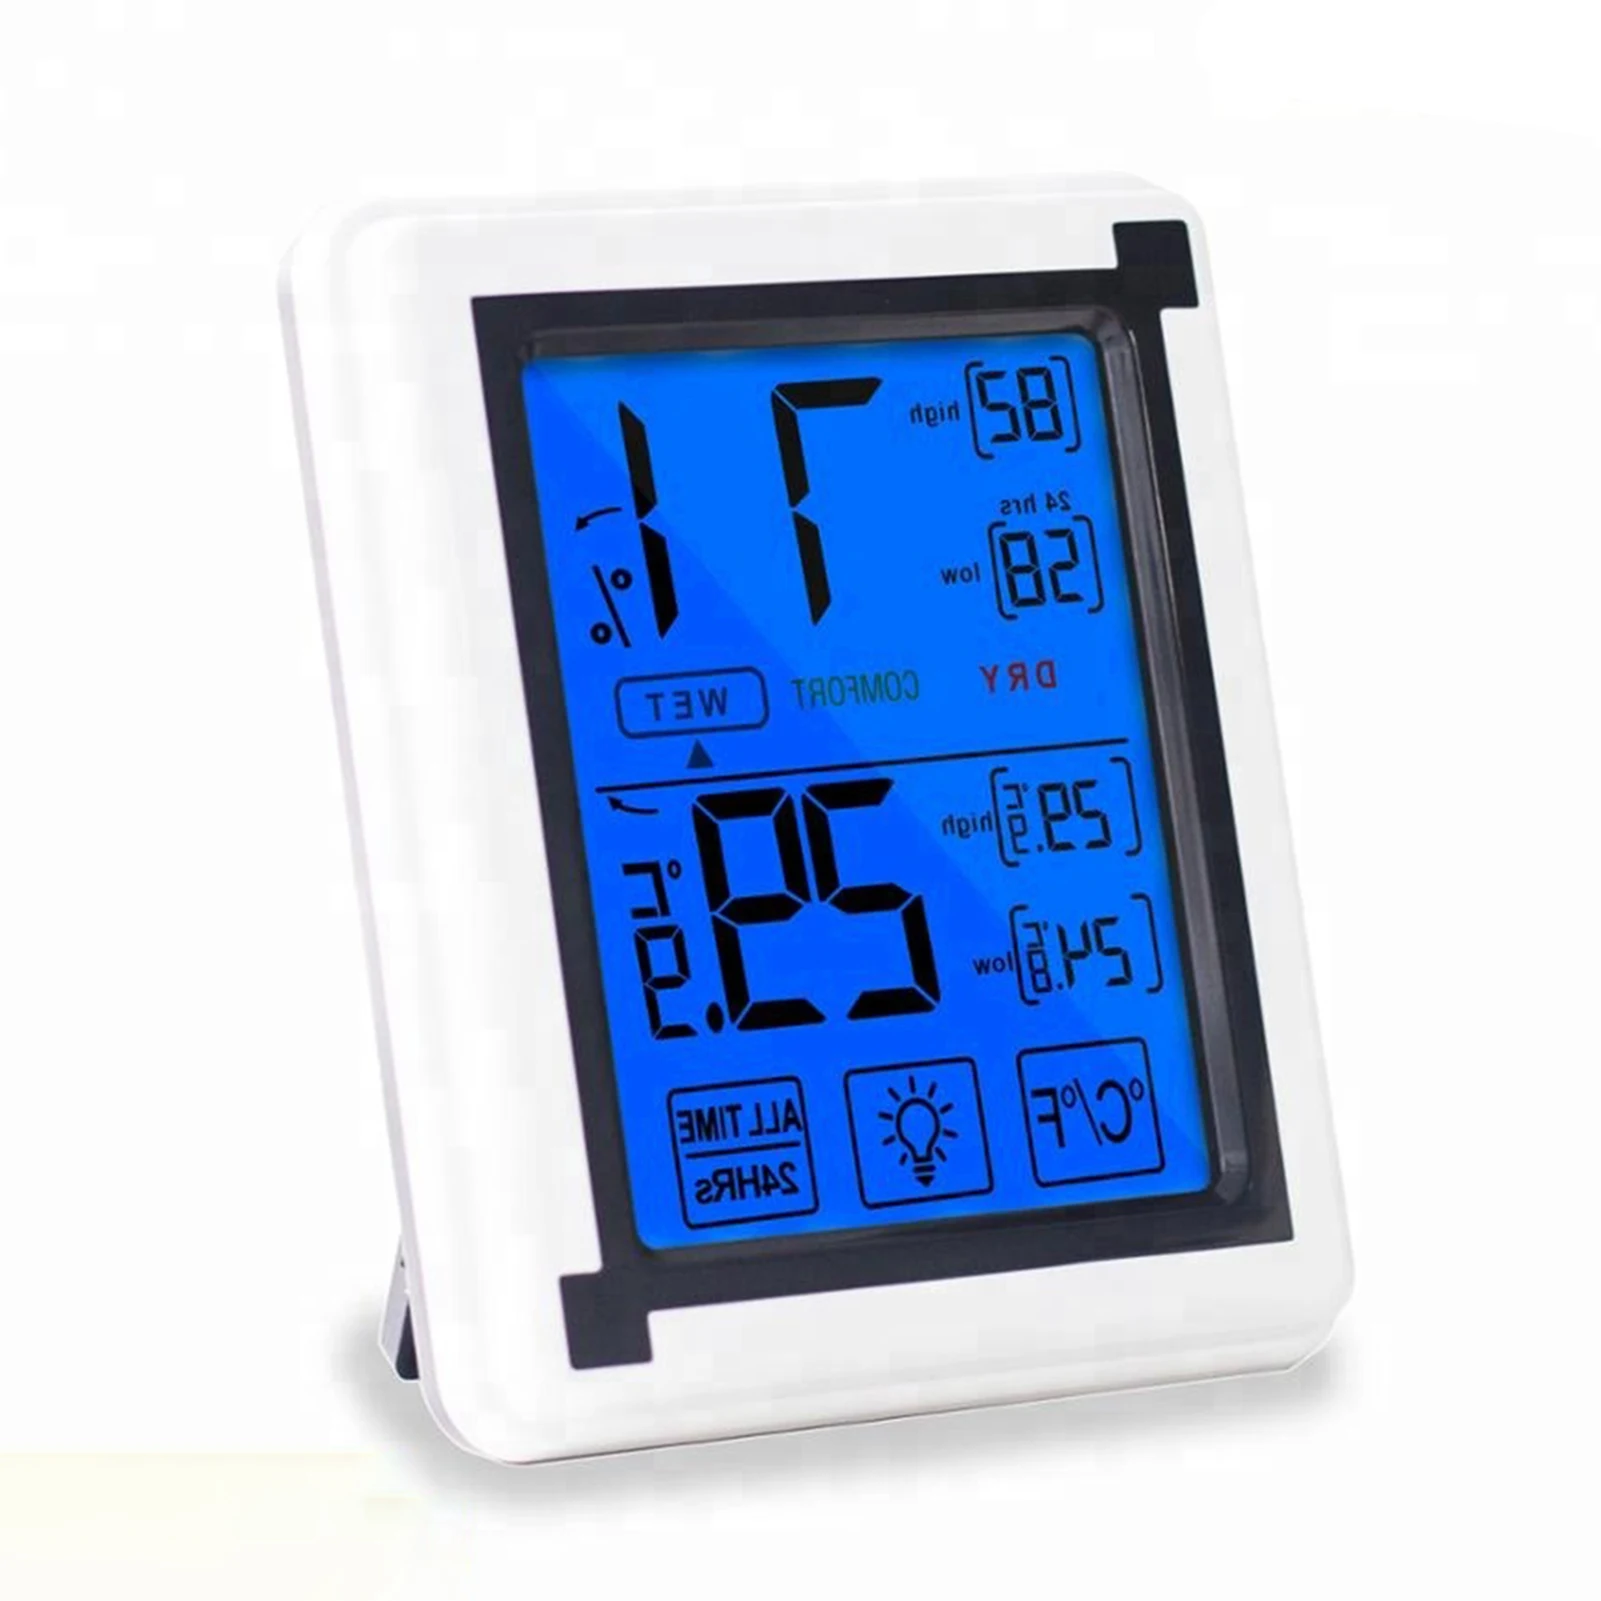 

Digital Hygrometer Thermometer Meters Gauge Indoor LCD Display for Home Garage Greenhouse